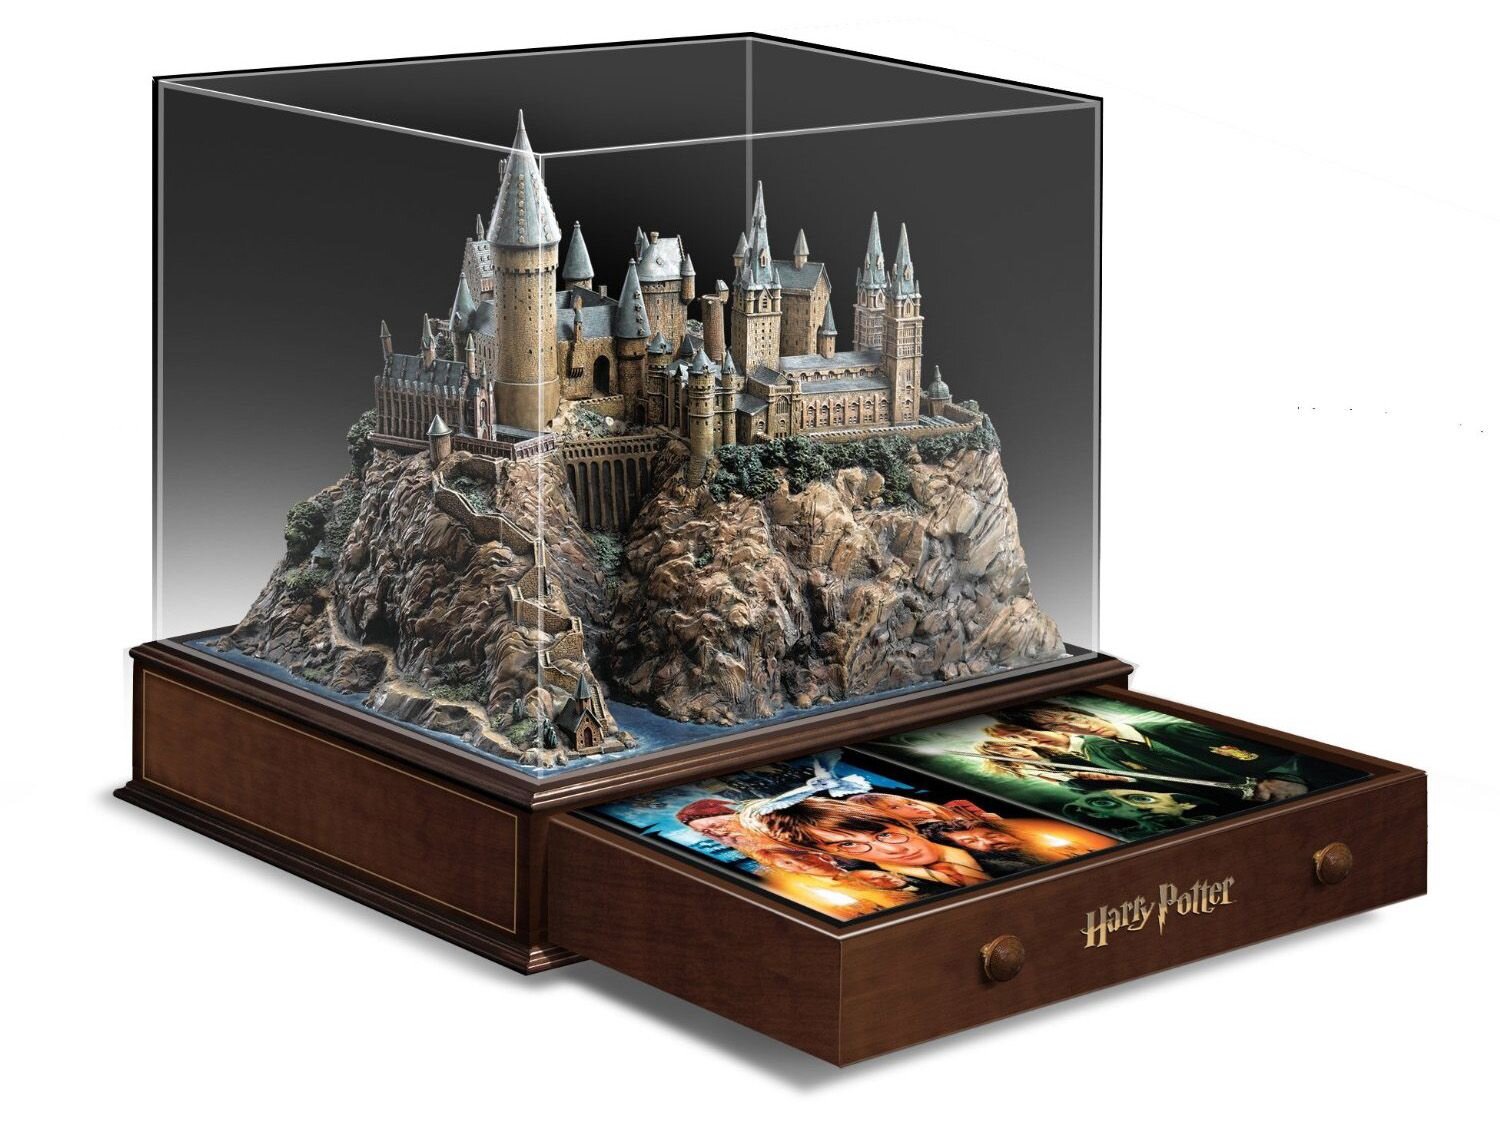 https://images.squarespace-cdn.com/content/v1/5c71c7d8aadd342945360ba1/1591785155732-9ZDIHBWJOQO0HUB0NVHD/Harry+Potter+Years+1-6+Hogwarts+Castle+Blu-ray.jpg